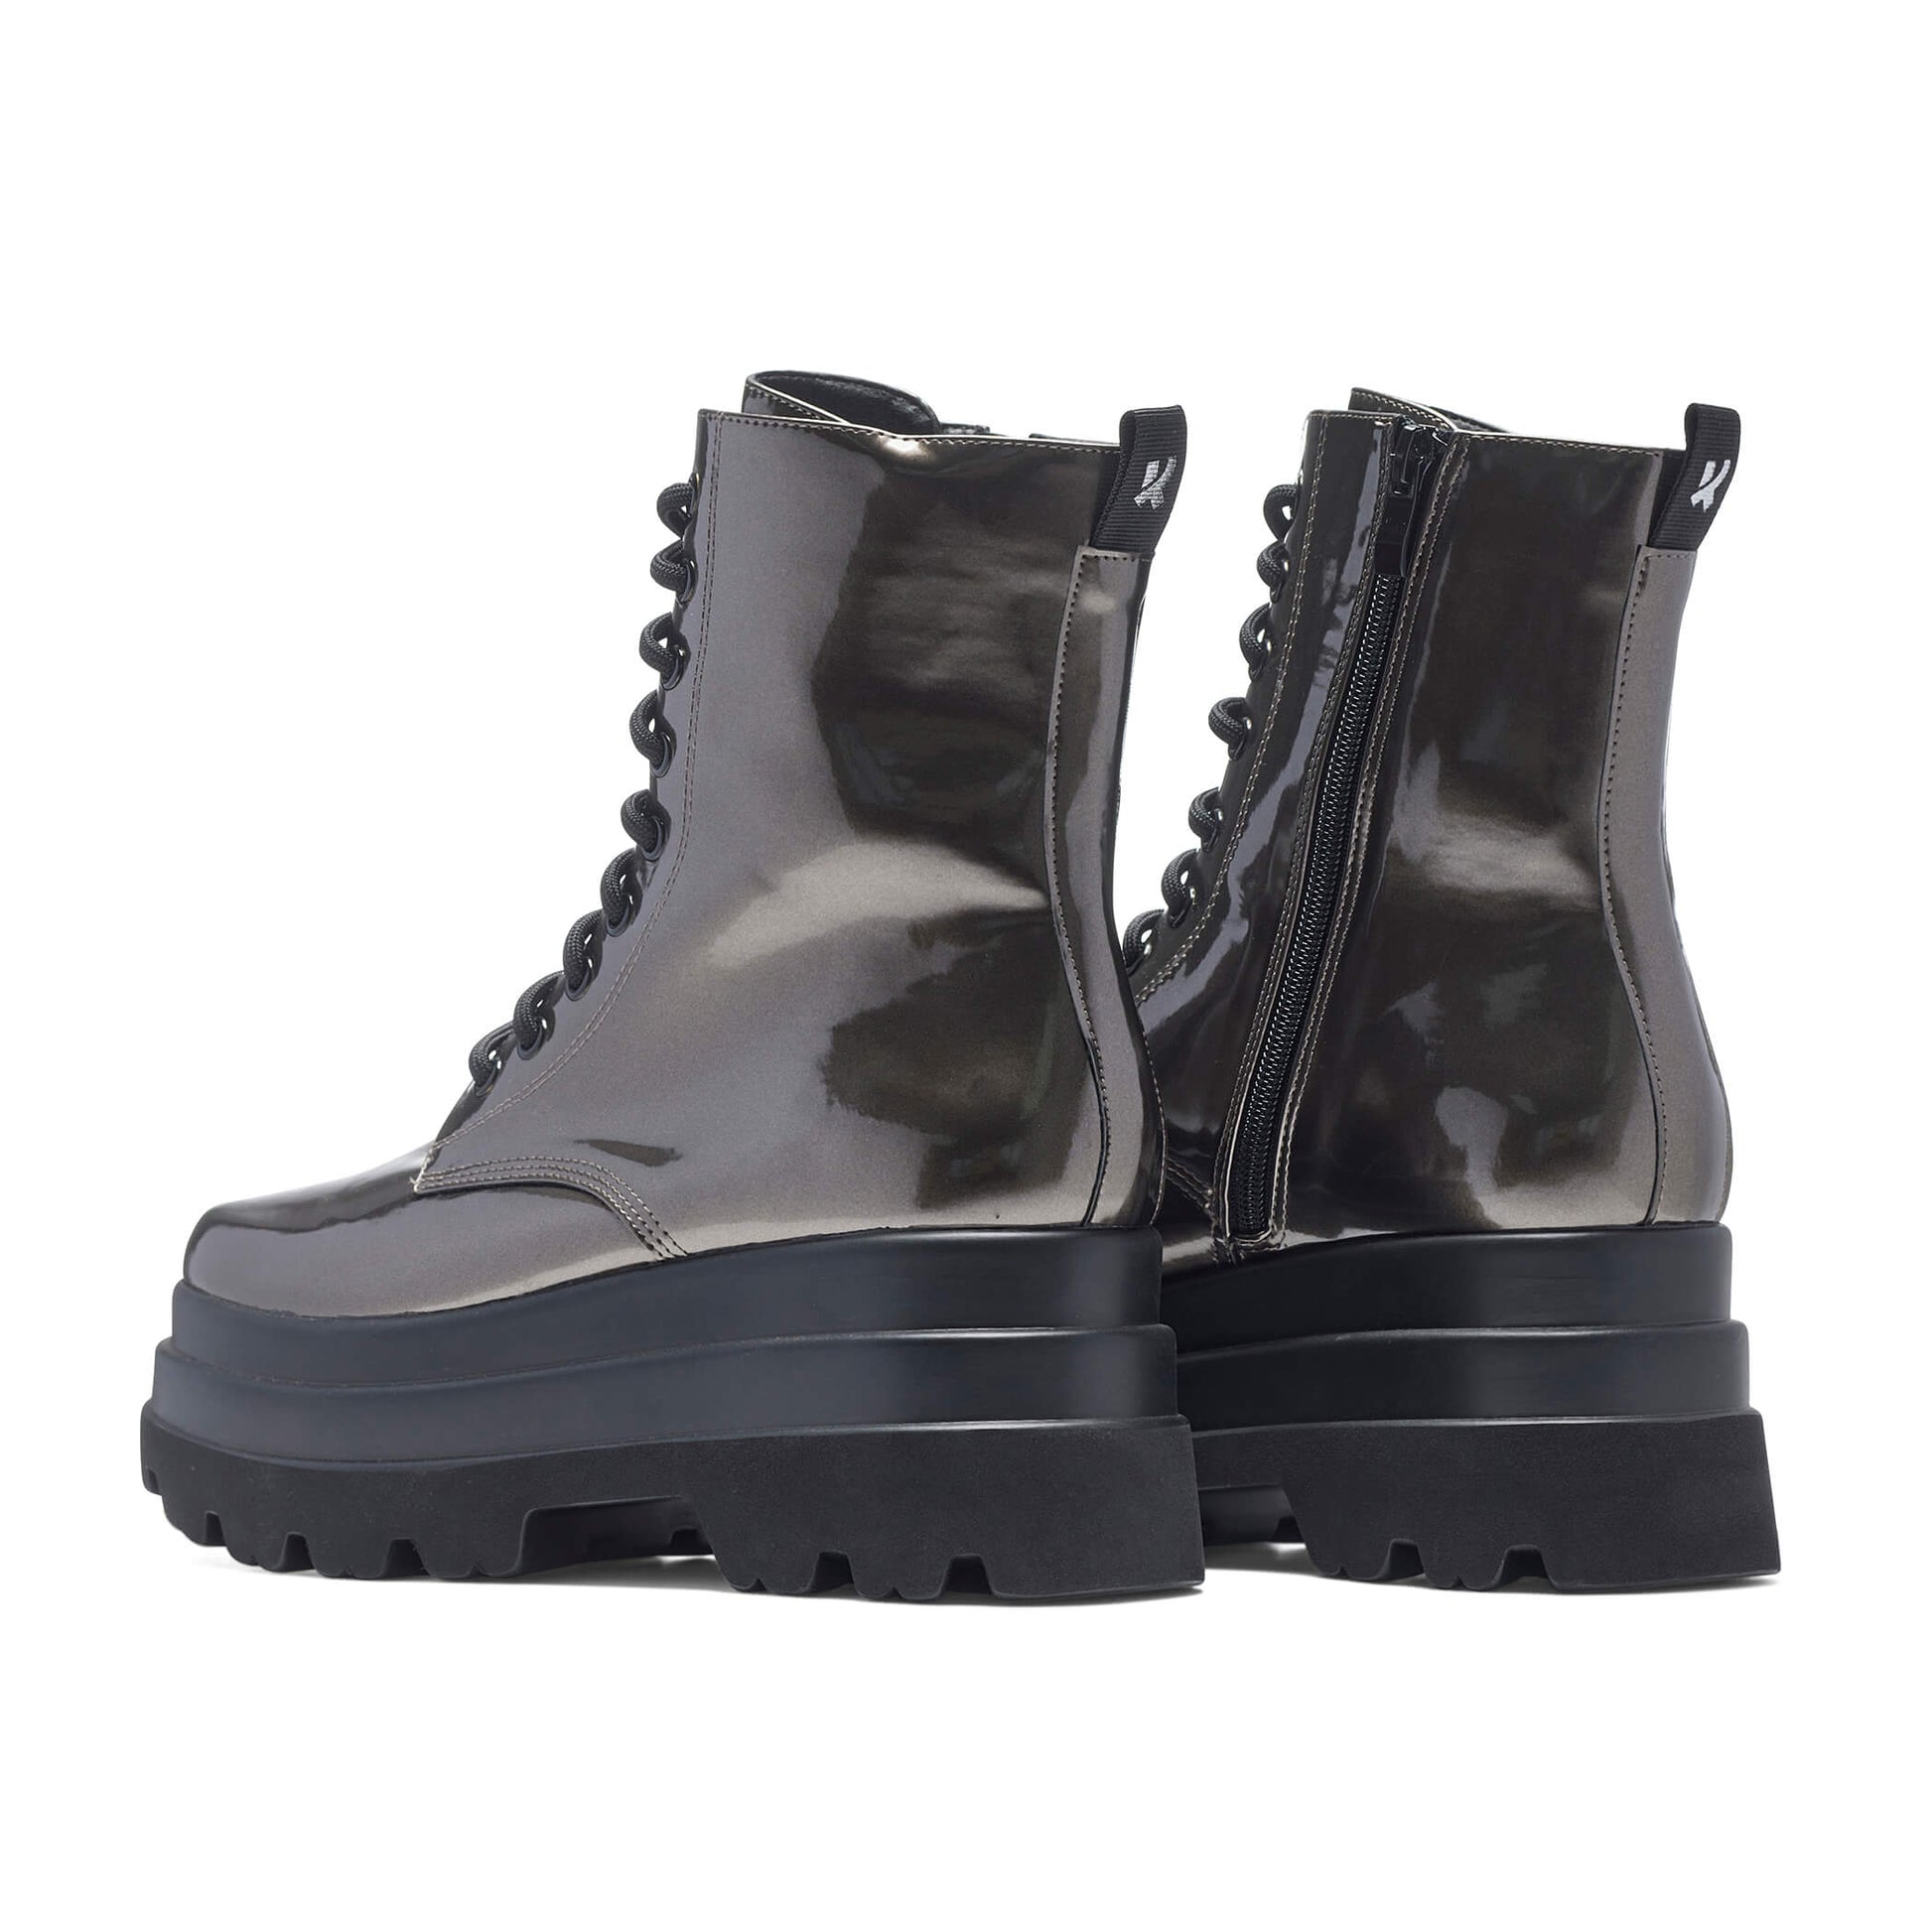 Deathwatch Trident Platform Boots - Static Grey - KOI Footwear - Back View